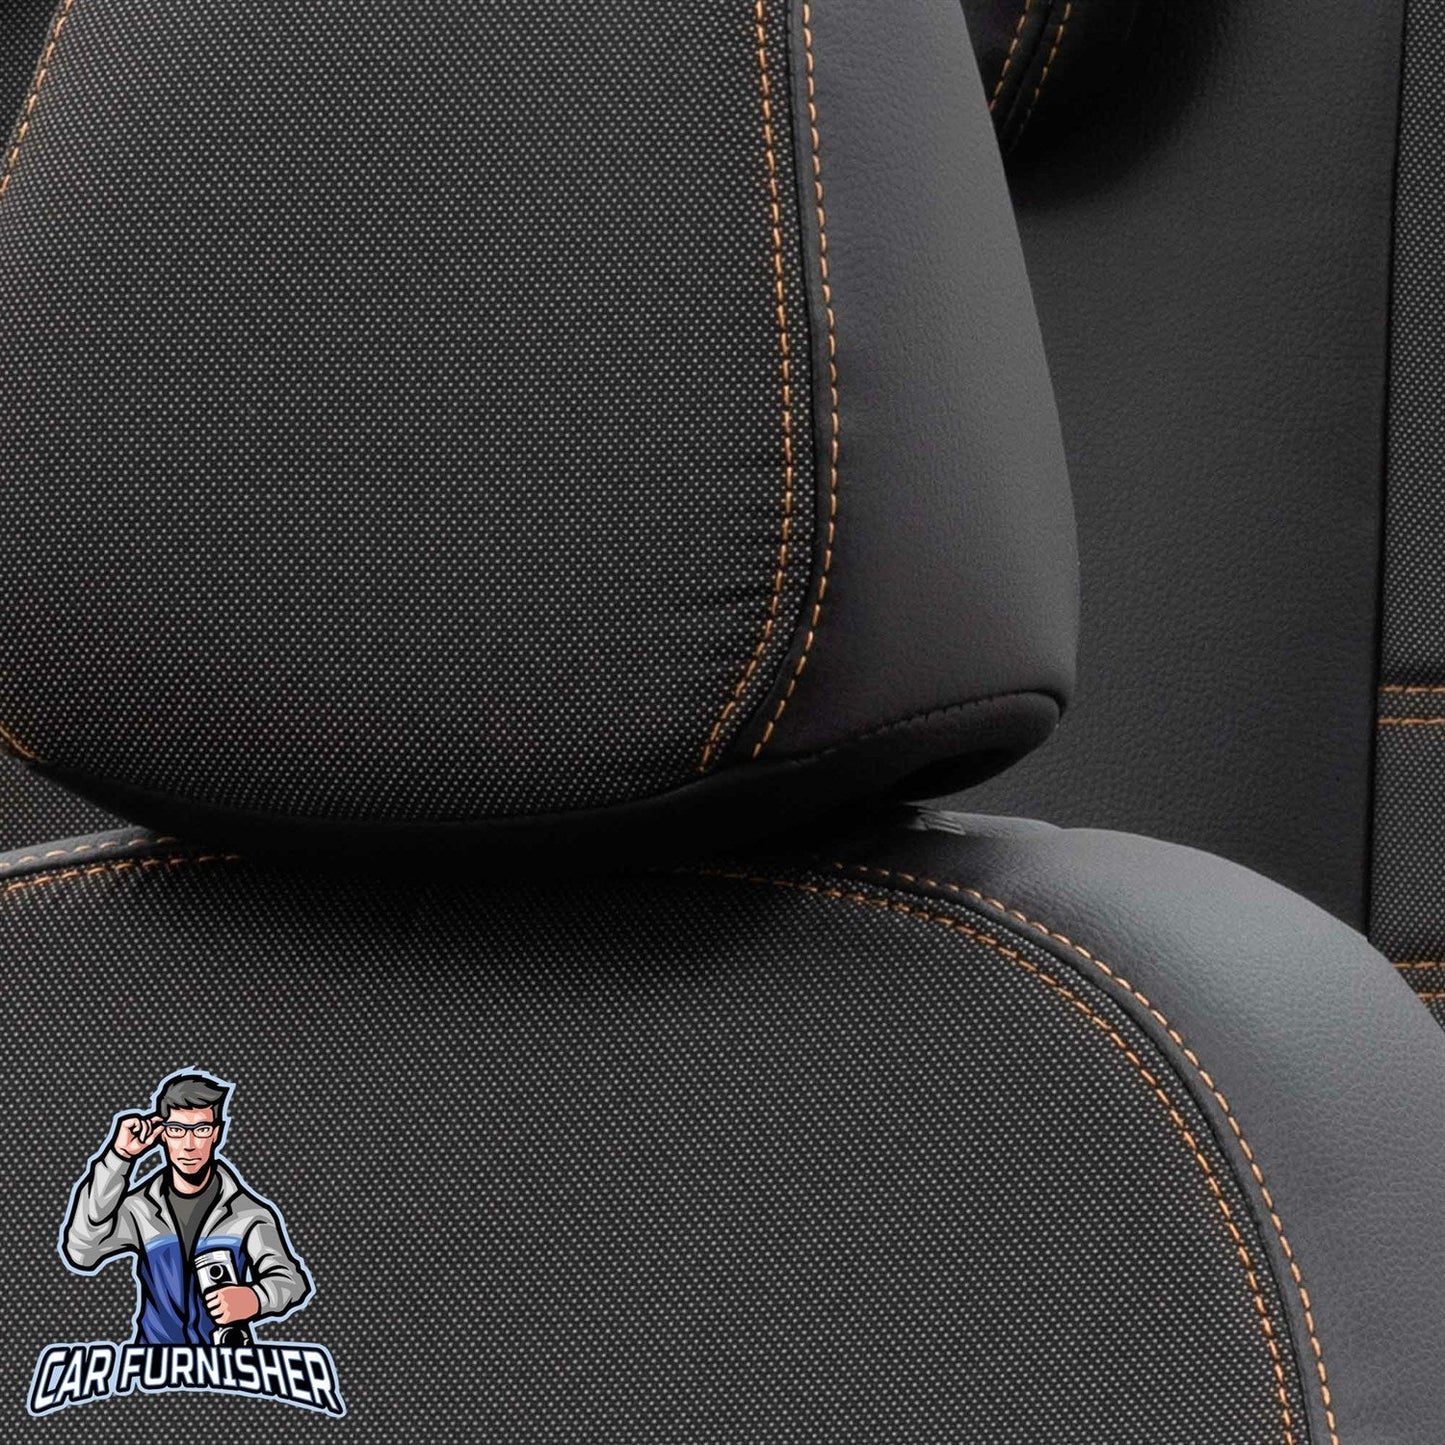 Mercedes GLC Class Seat Covers Paris Leather & Jacquard Design Dark Beige Leather & Jacquard Fabric